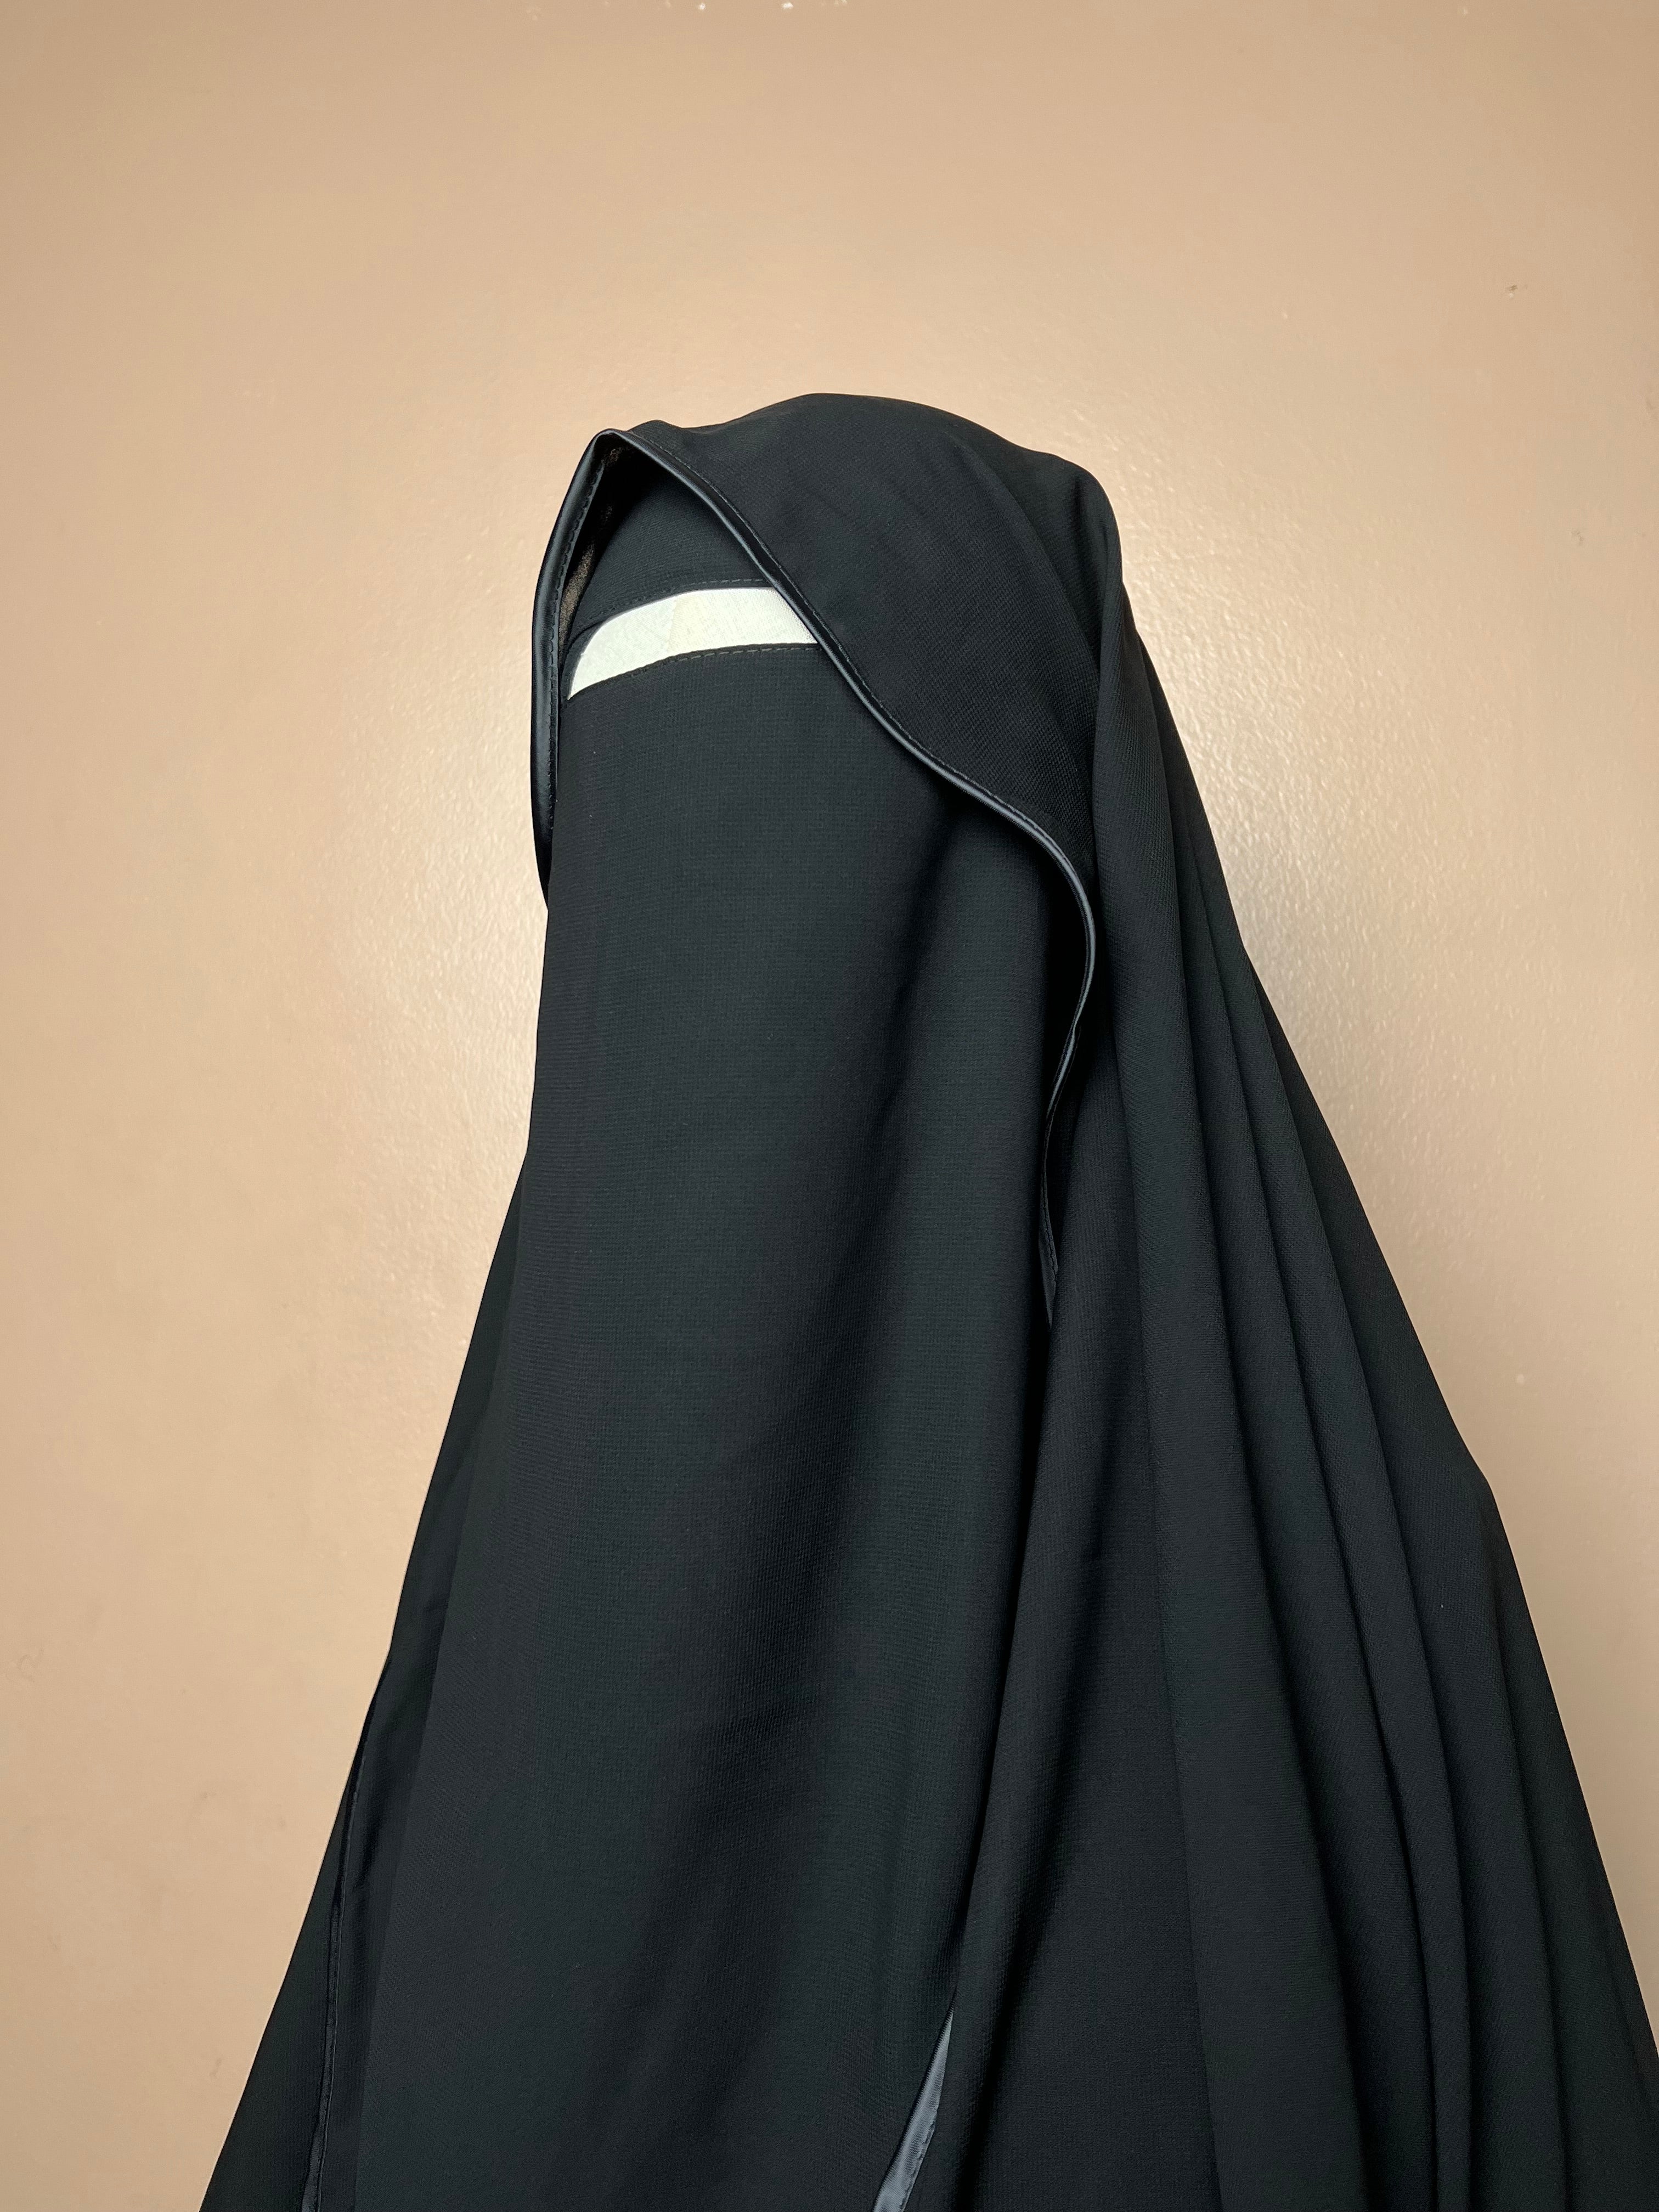 Niqab Indonesia